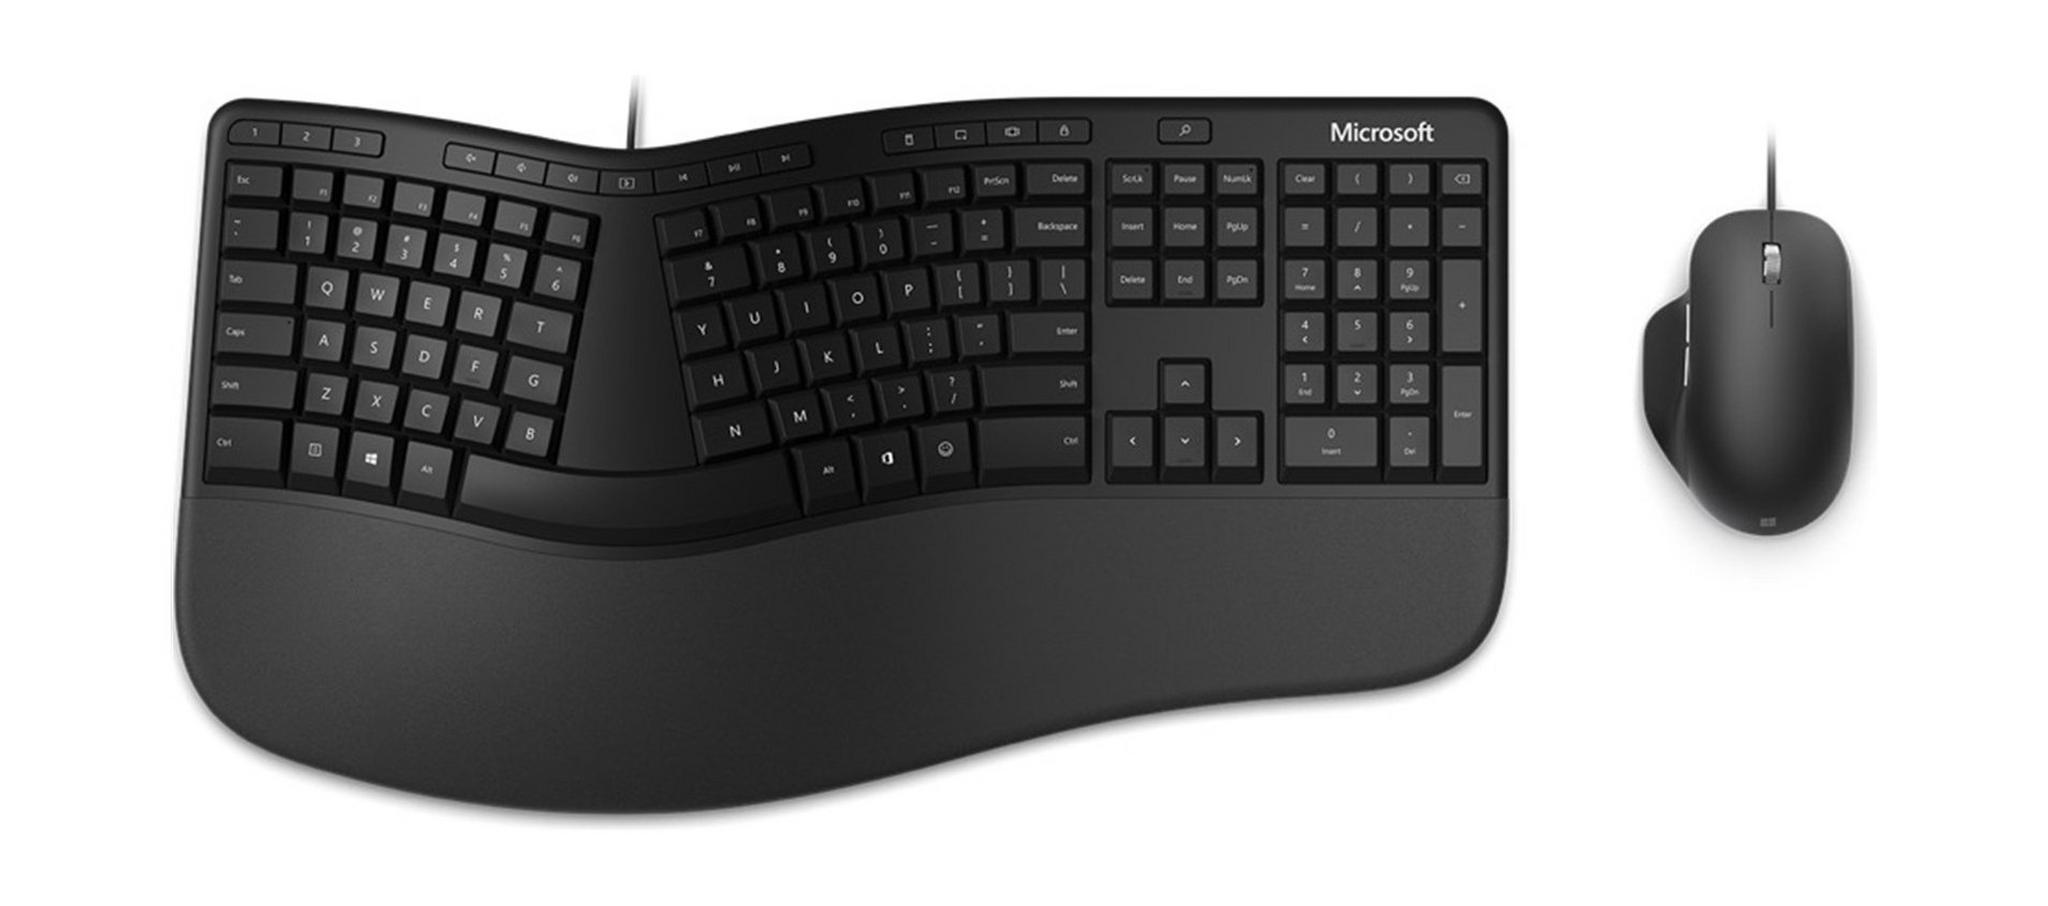 Microsoft Ergonomic Wired USB Desktop Keyboard & Mouse - Black